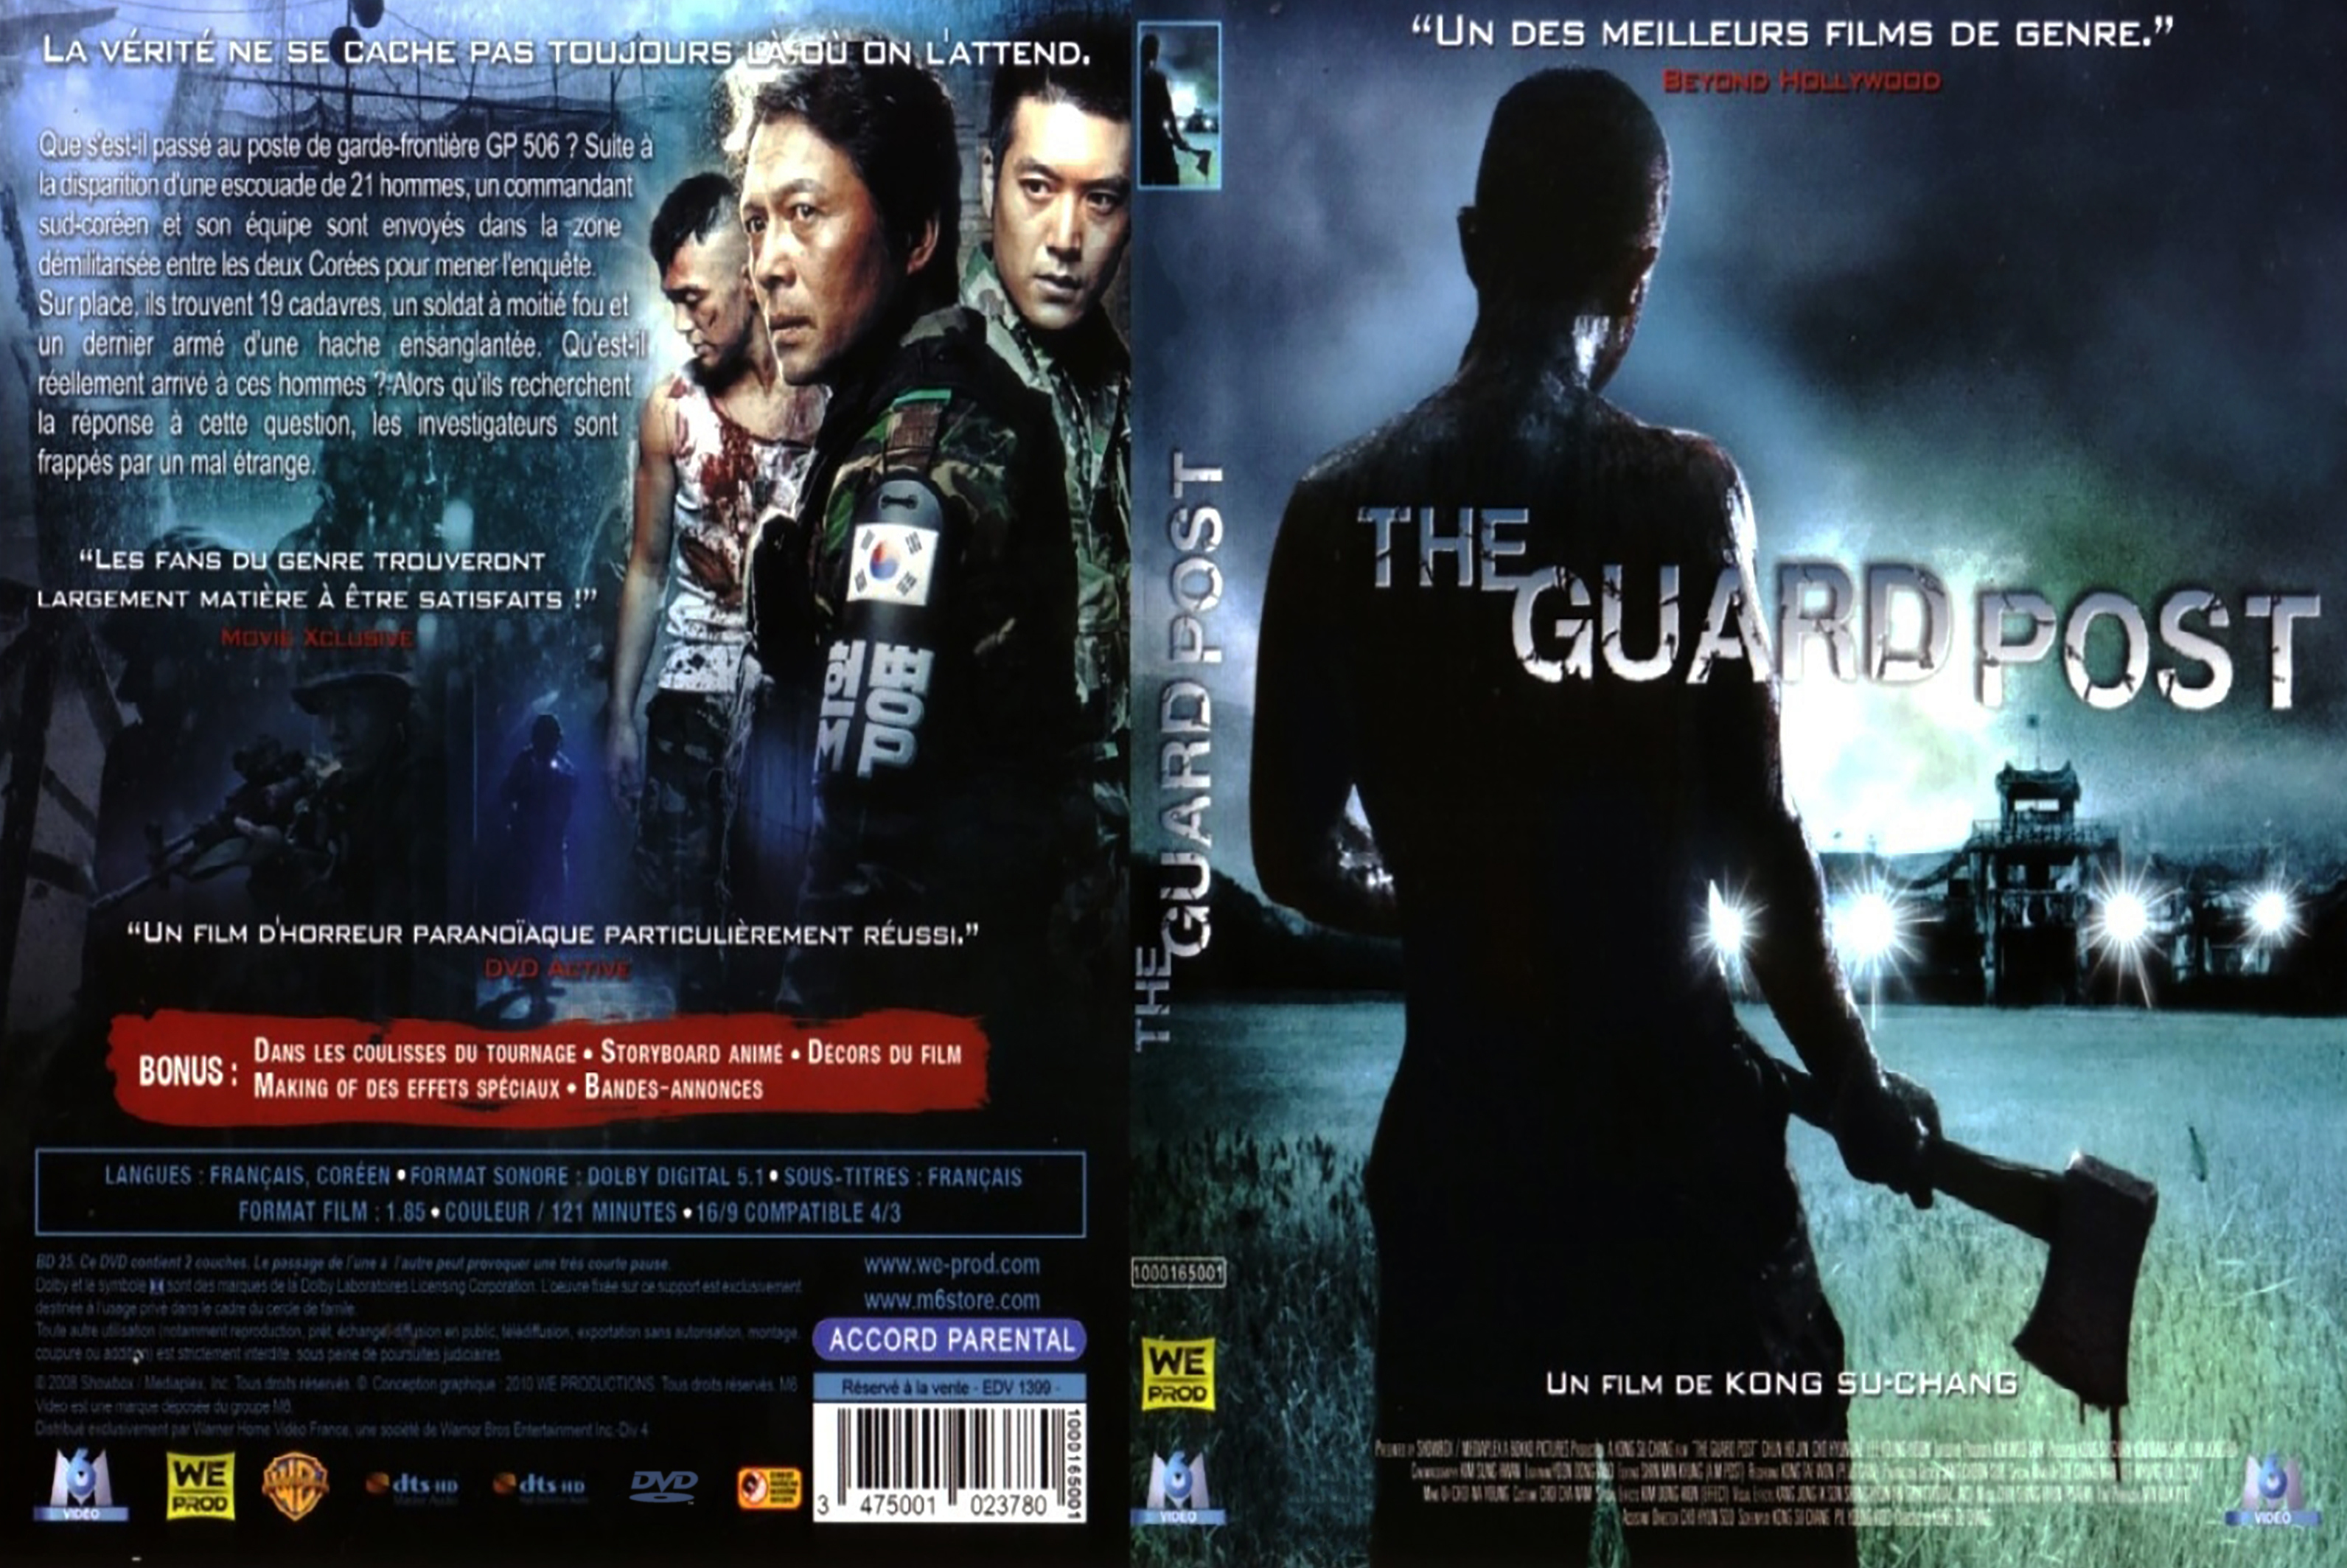 Jaquette DVD The Guard Post custom